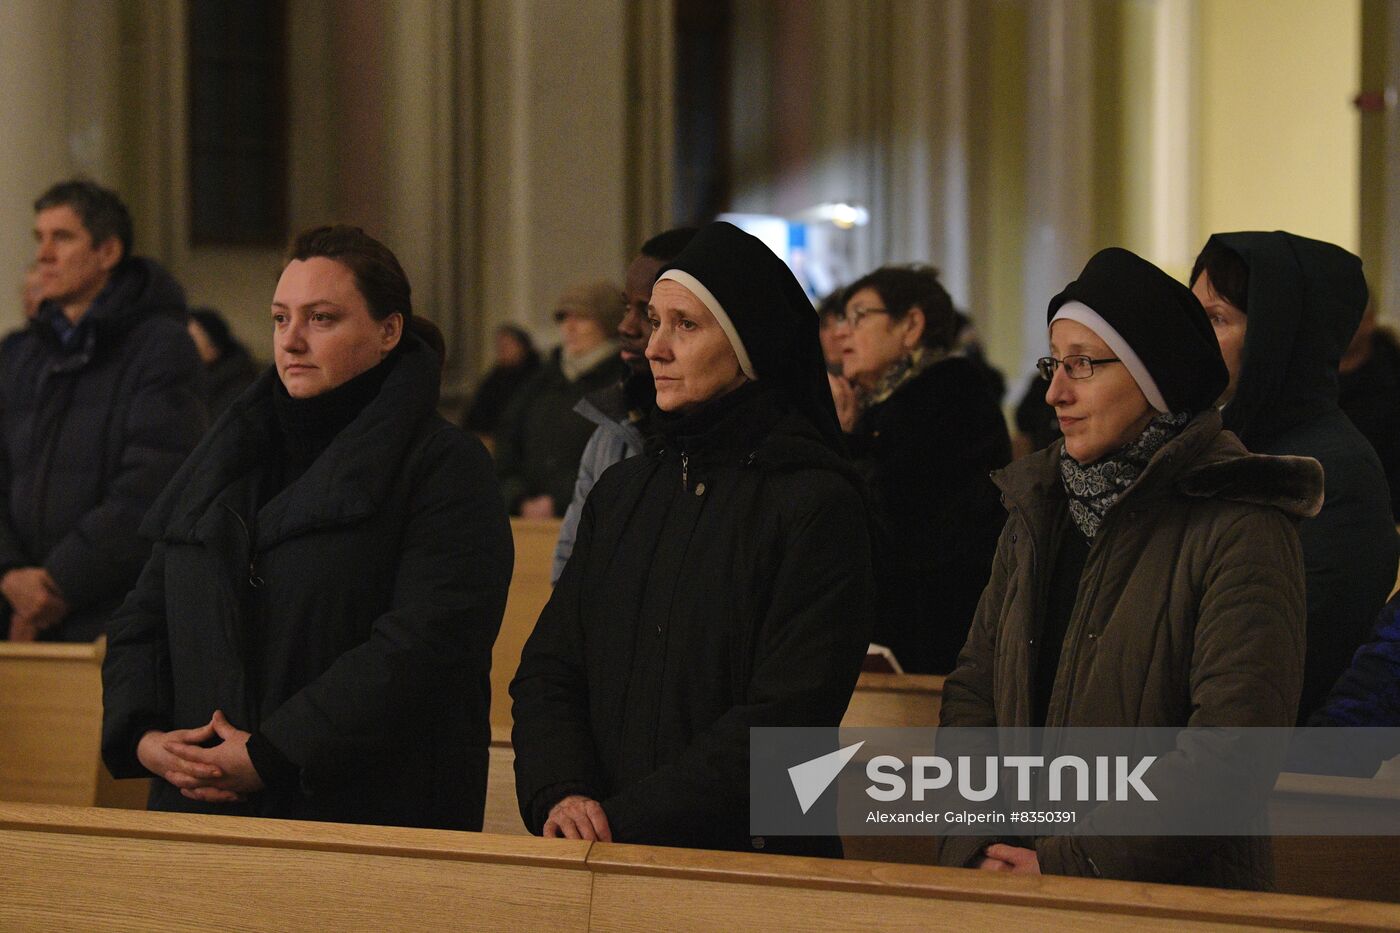 Russia Pope Benedict XVI Funeral Mess